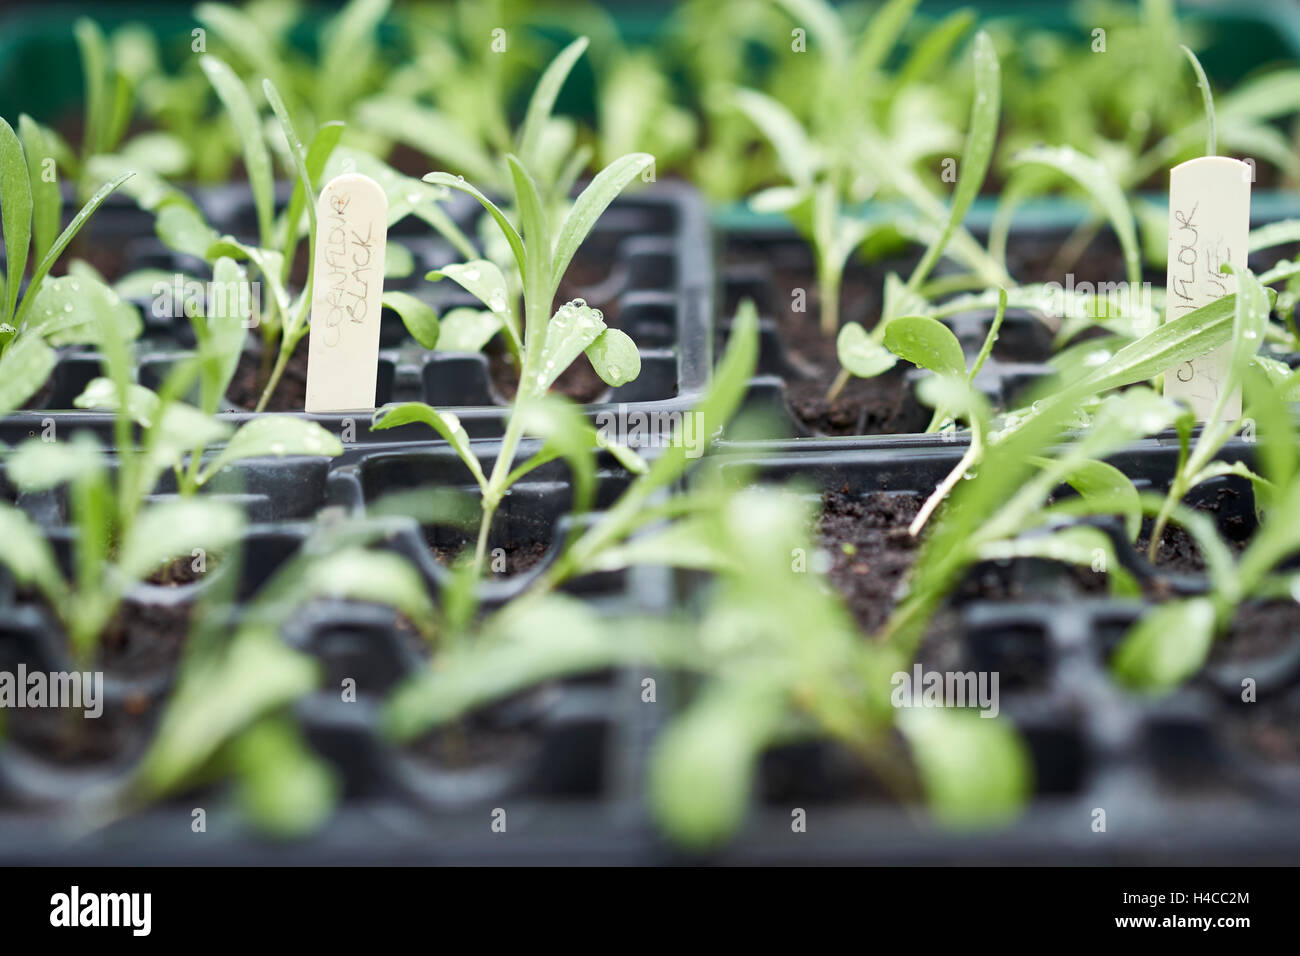 Cornflower 'Black Ball' seedlings growing in plastic seed trays in a greenhouse, UK. Stock Photo